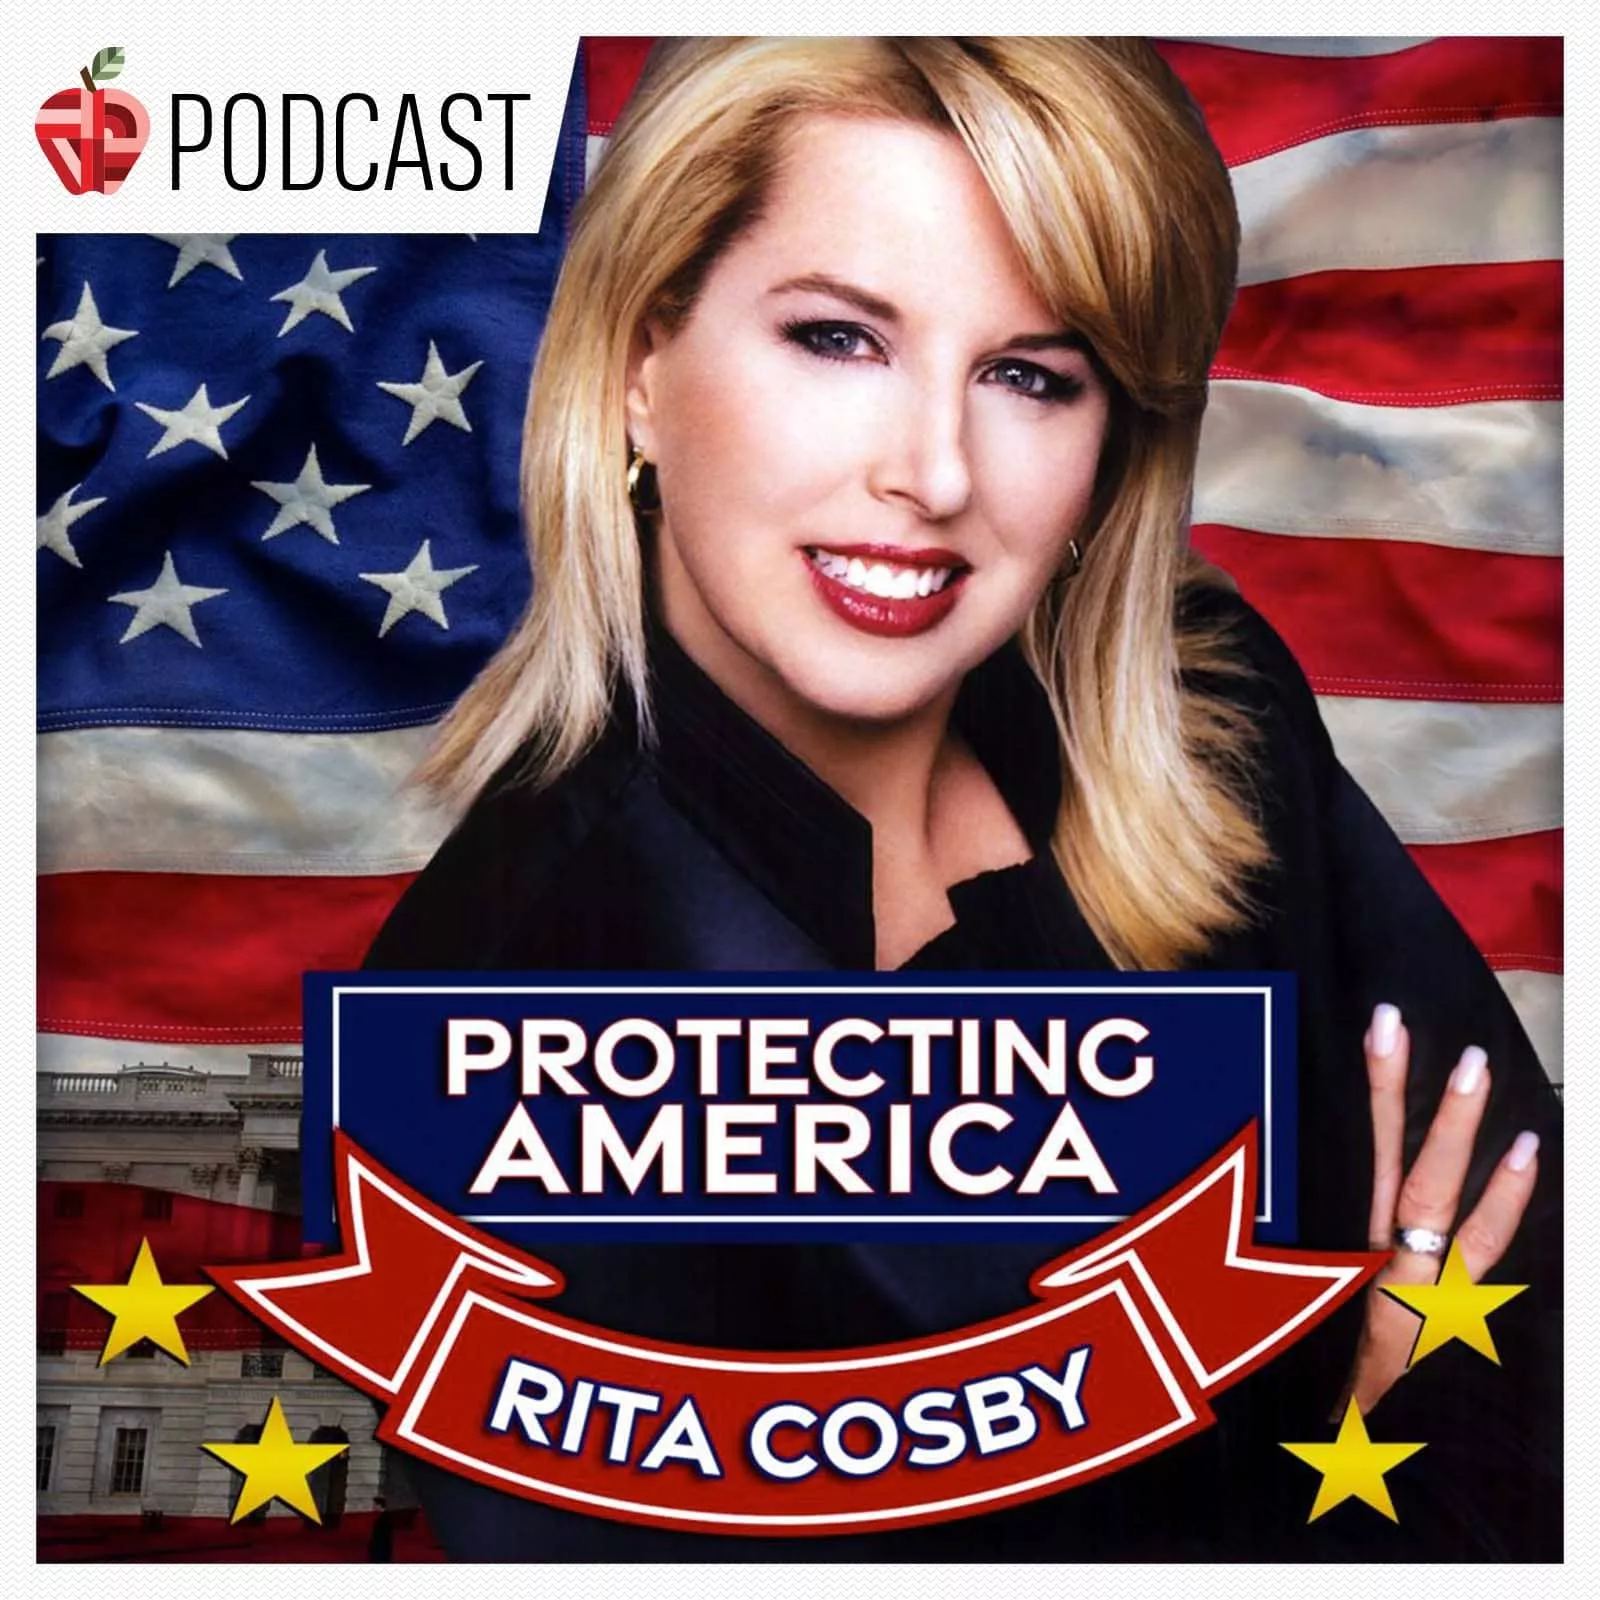 rita-cosby-protecting-america-correct-podcast-new-logo557518